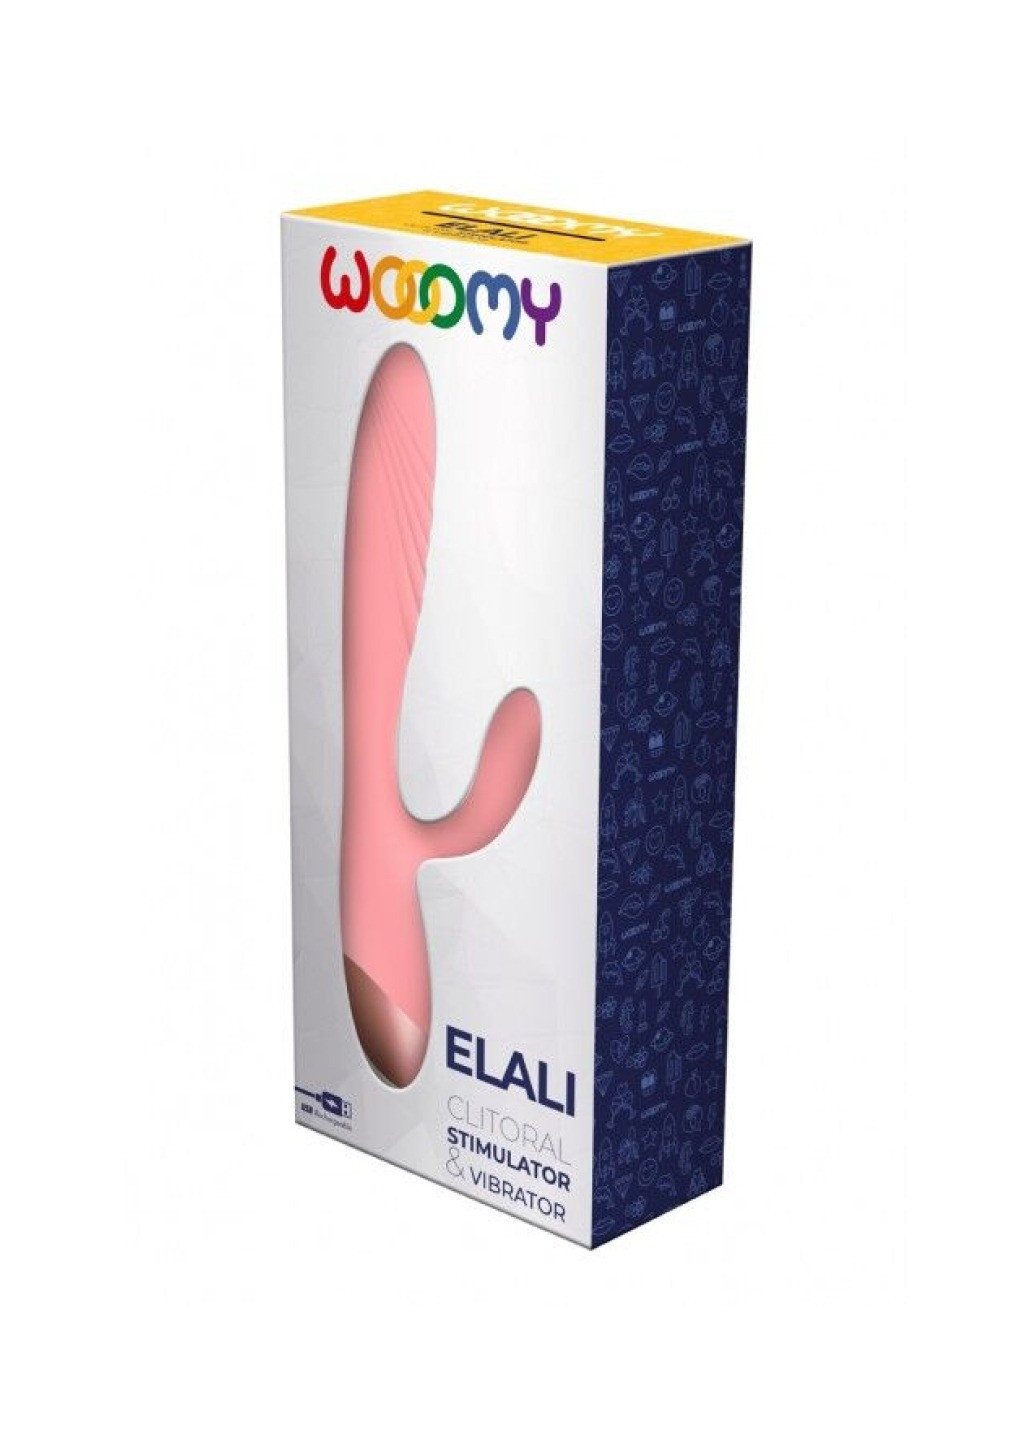 Вибратор-кролик Elali Pink Rabbit Vibrator Wooomy (272615978)